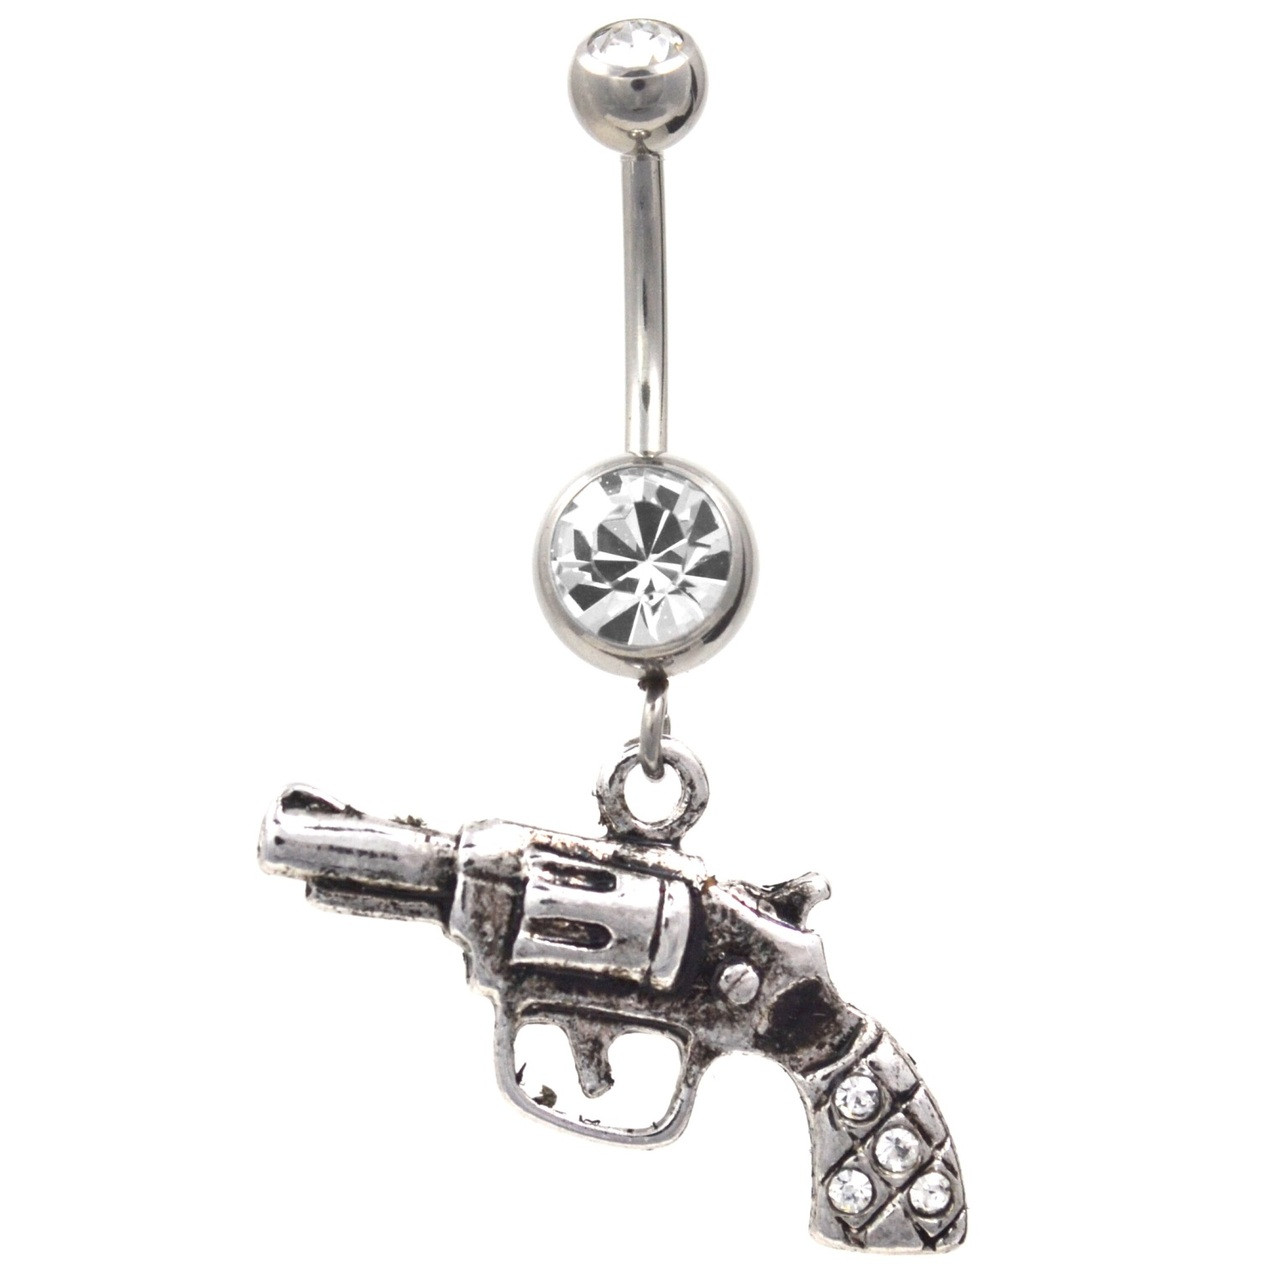 Steel Revolver Gun Dangle Belly Ring w/Clear Gems